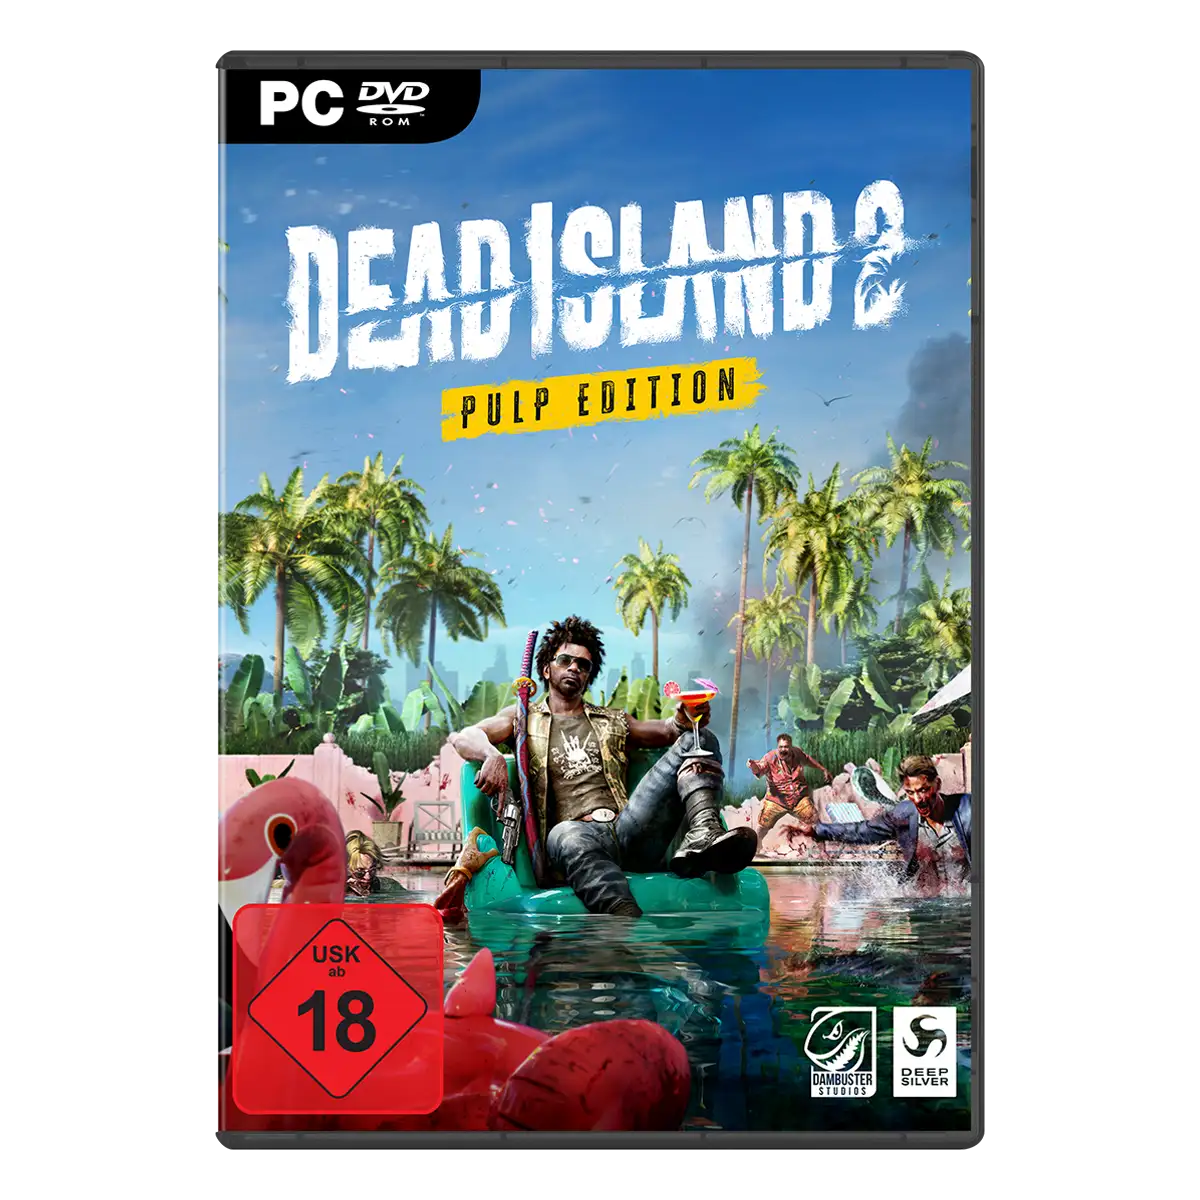 Dead Island 2 PULP Edition (PC) (USK)